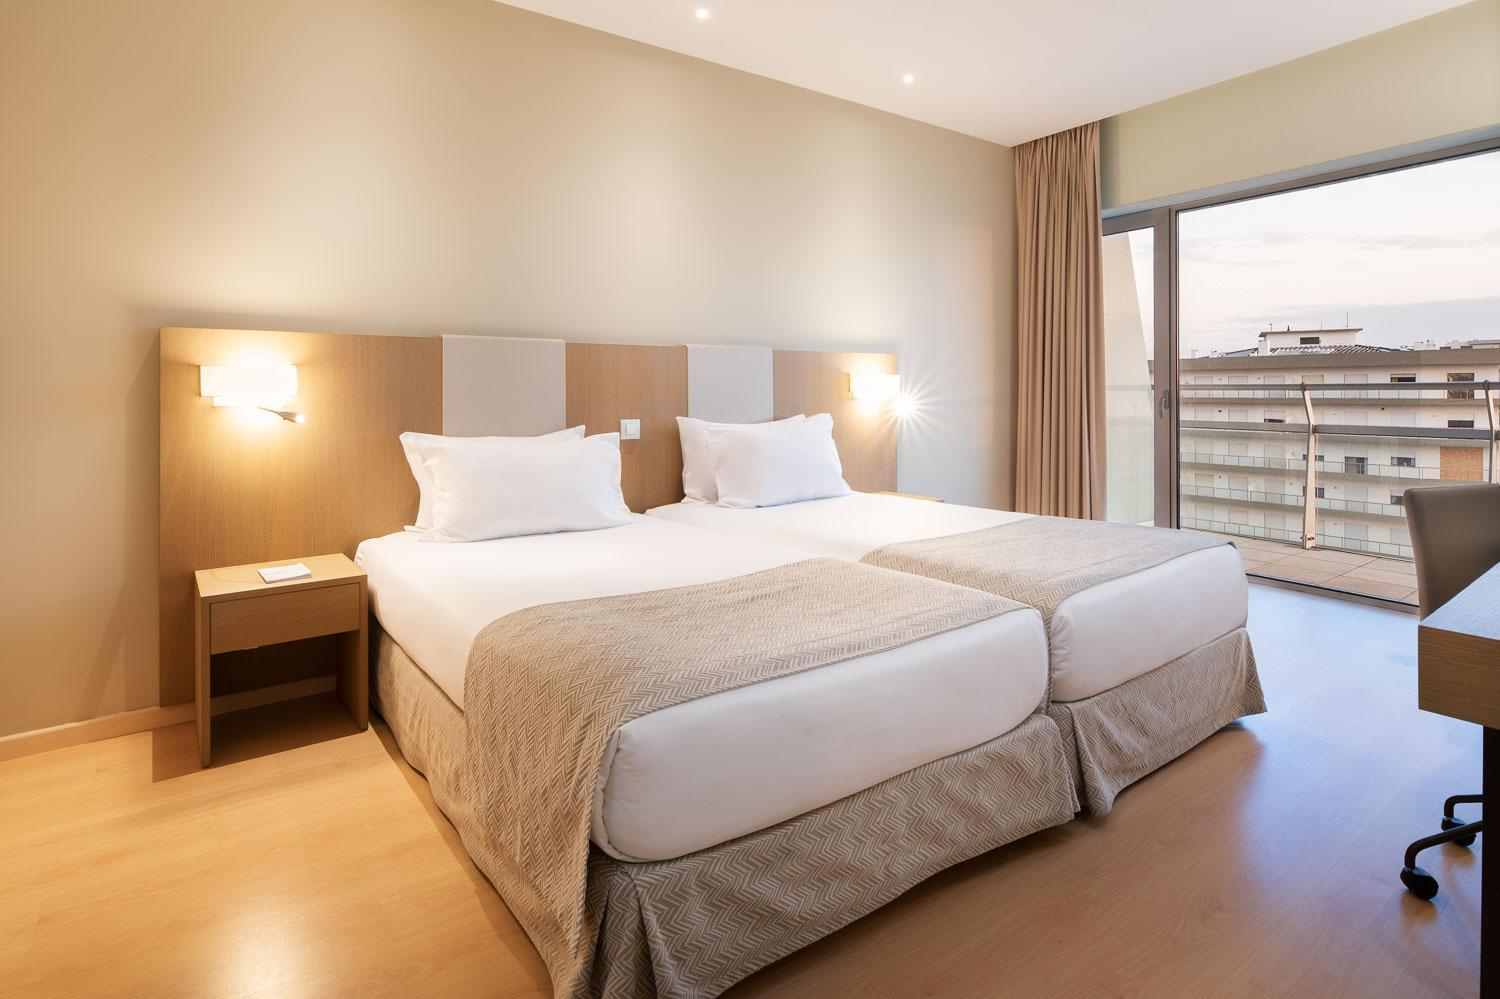 Bedroom 3, Eurostars Oasis Plaza Hotel, Figueira da Foz